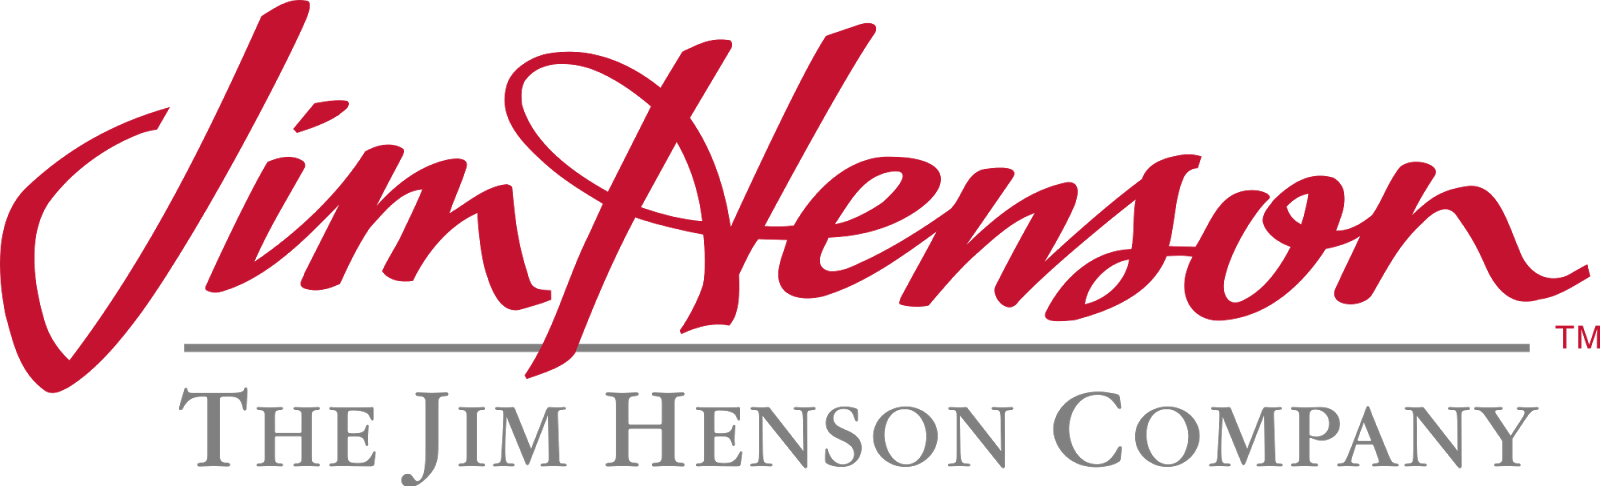 About The Jim Henson Company The Jim Henson Company - Jim Henson Studios Logo Clipart (1600x486), Png Download